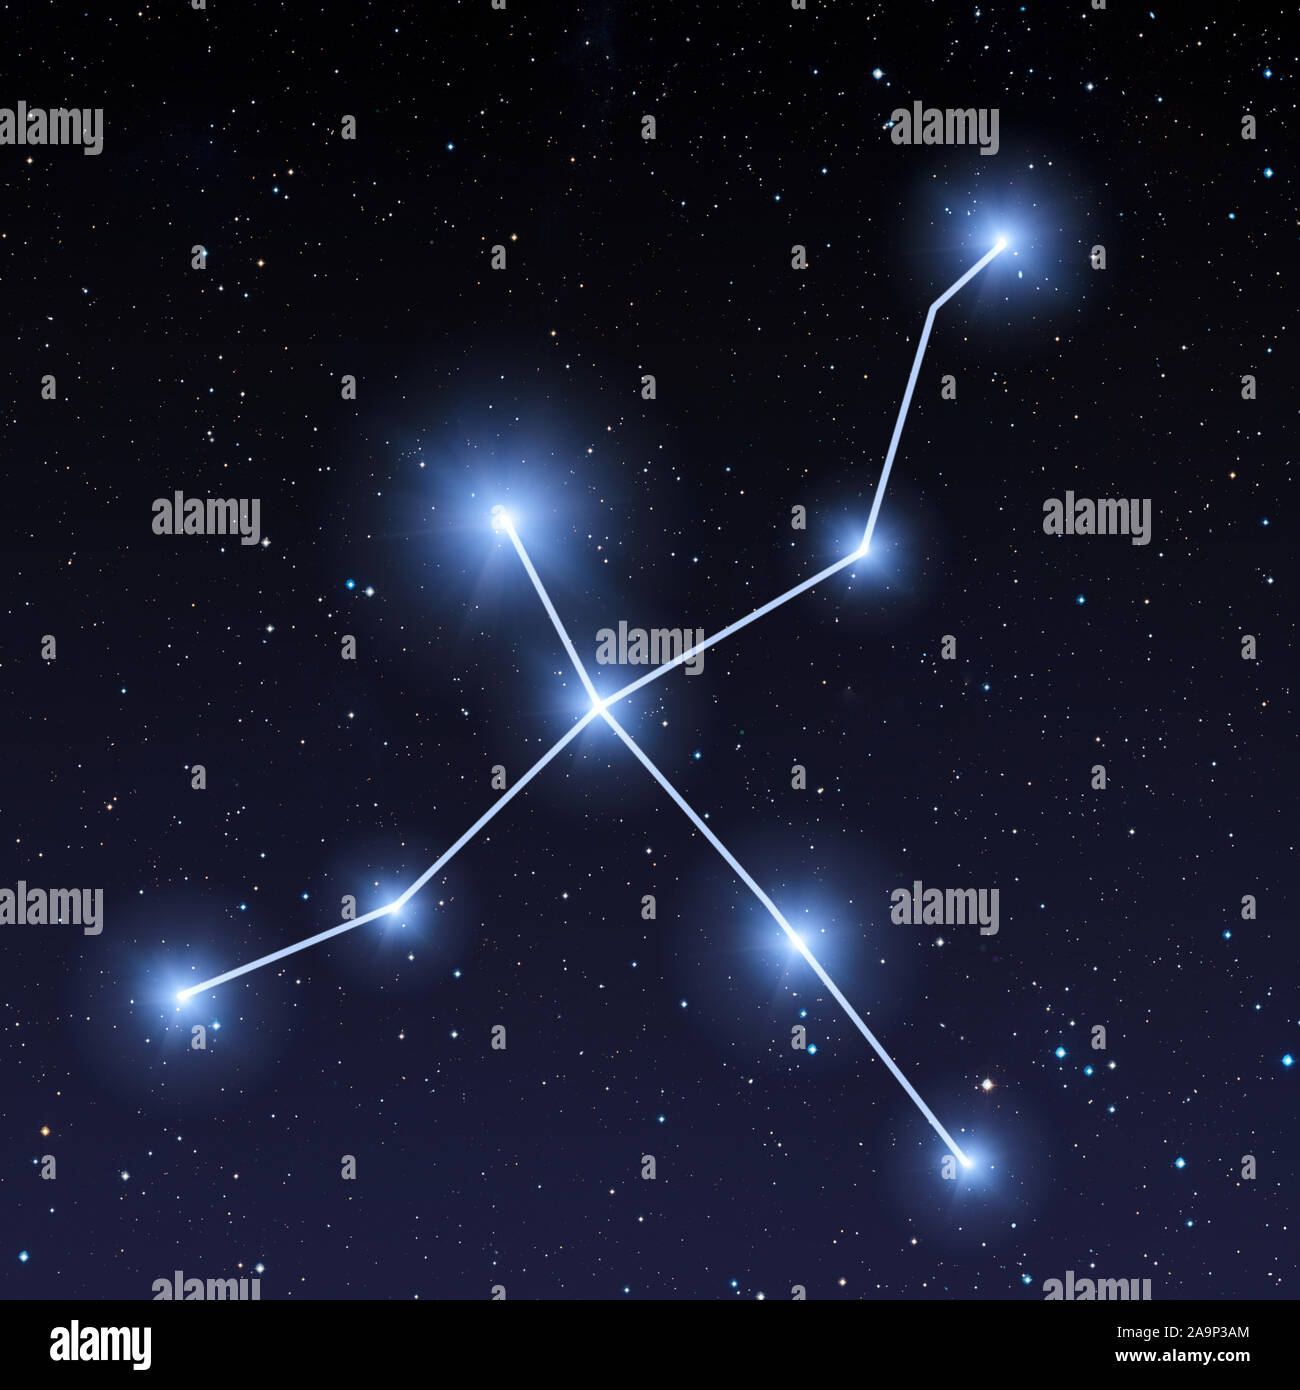 Cygnus constellation in night sky with bright blue stars Stock Photo